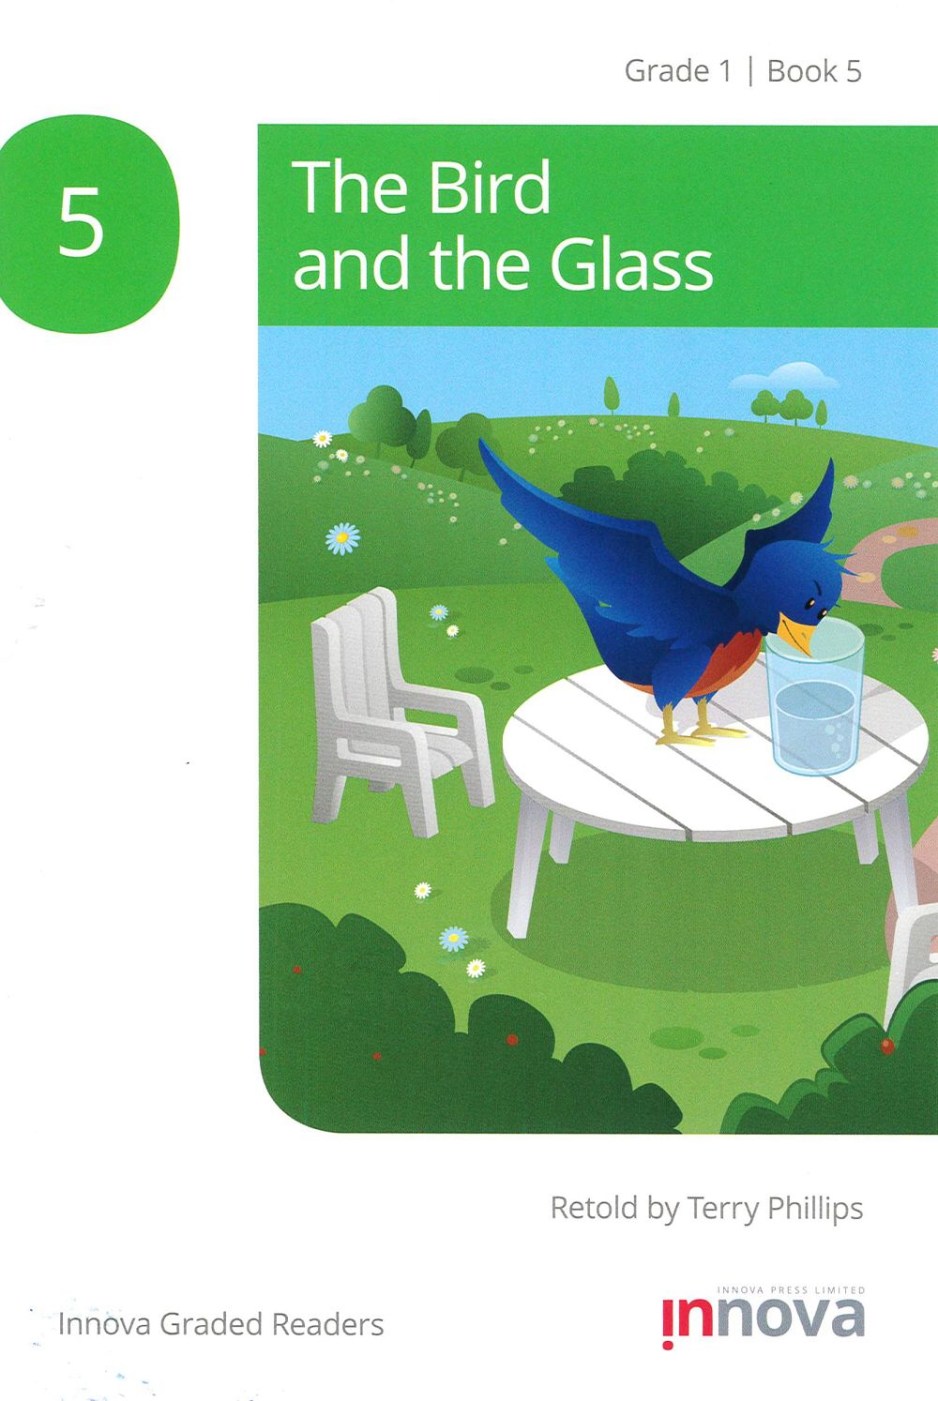 Innova Graded Readers Grade 1 (Book 5): The Bird and the Glass